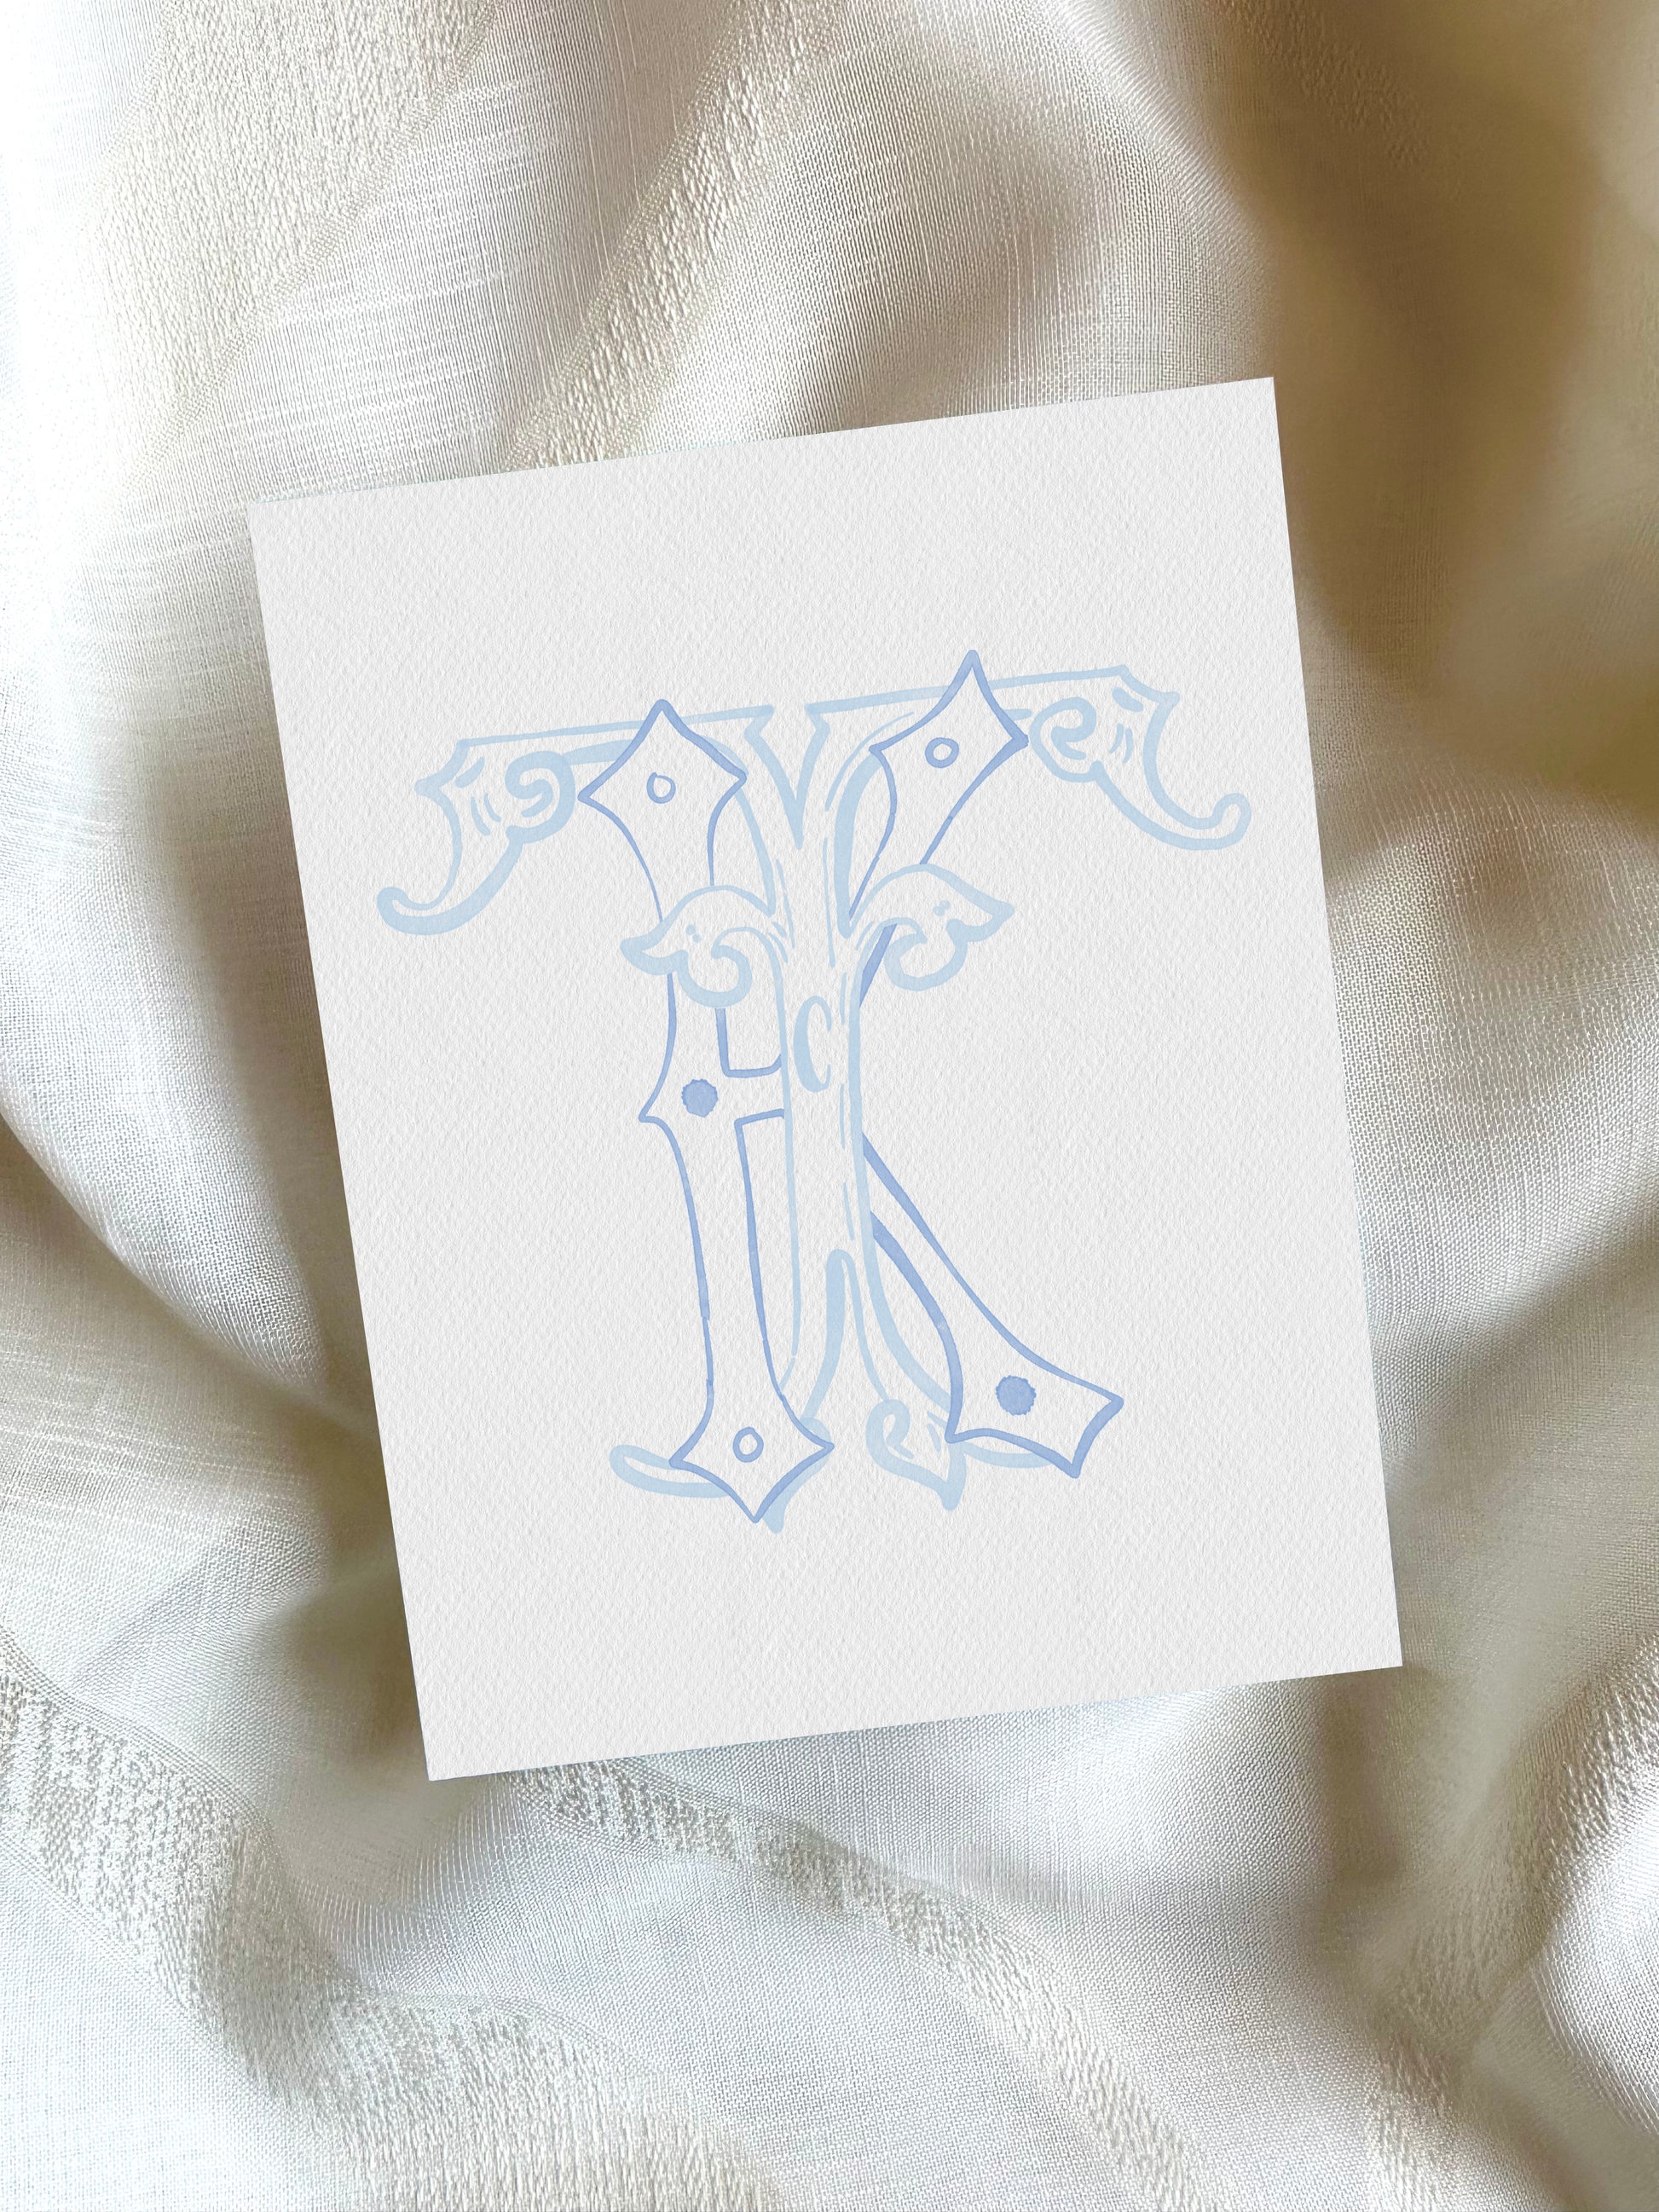 2 Letter Monogram with Letters KT TK | Digital Download - Wedding Monogram SVG, Personal Logo, Wedding Logo for Wedding Invitations The Wedding Crest Lab